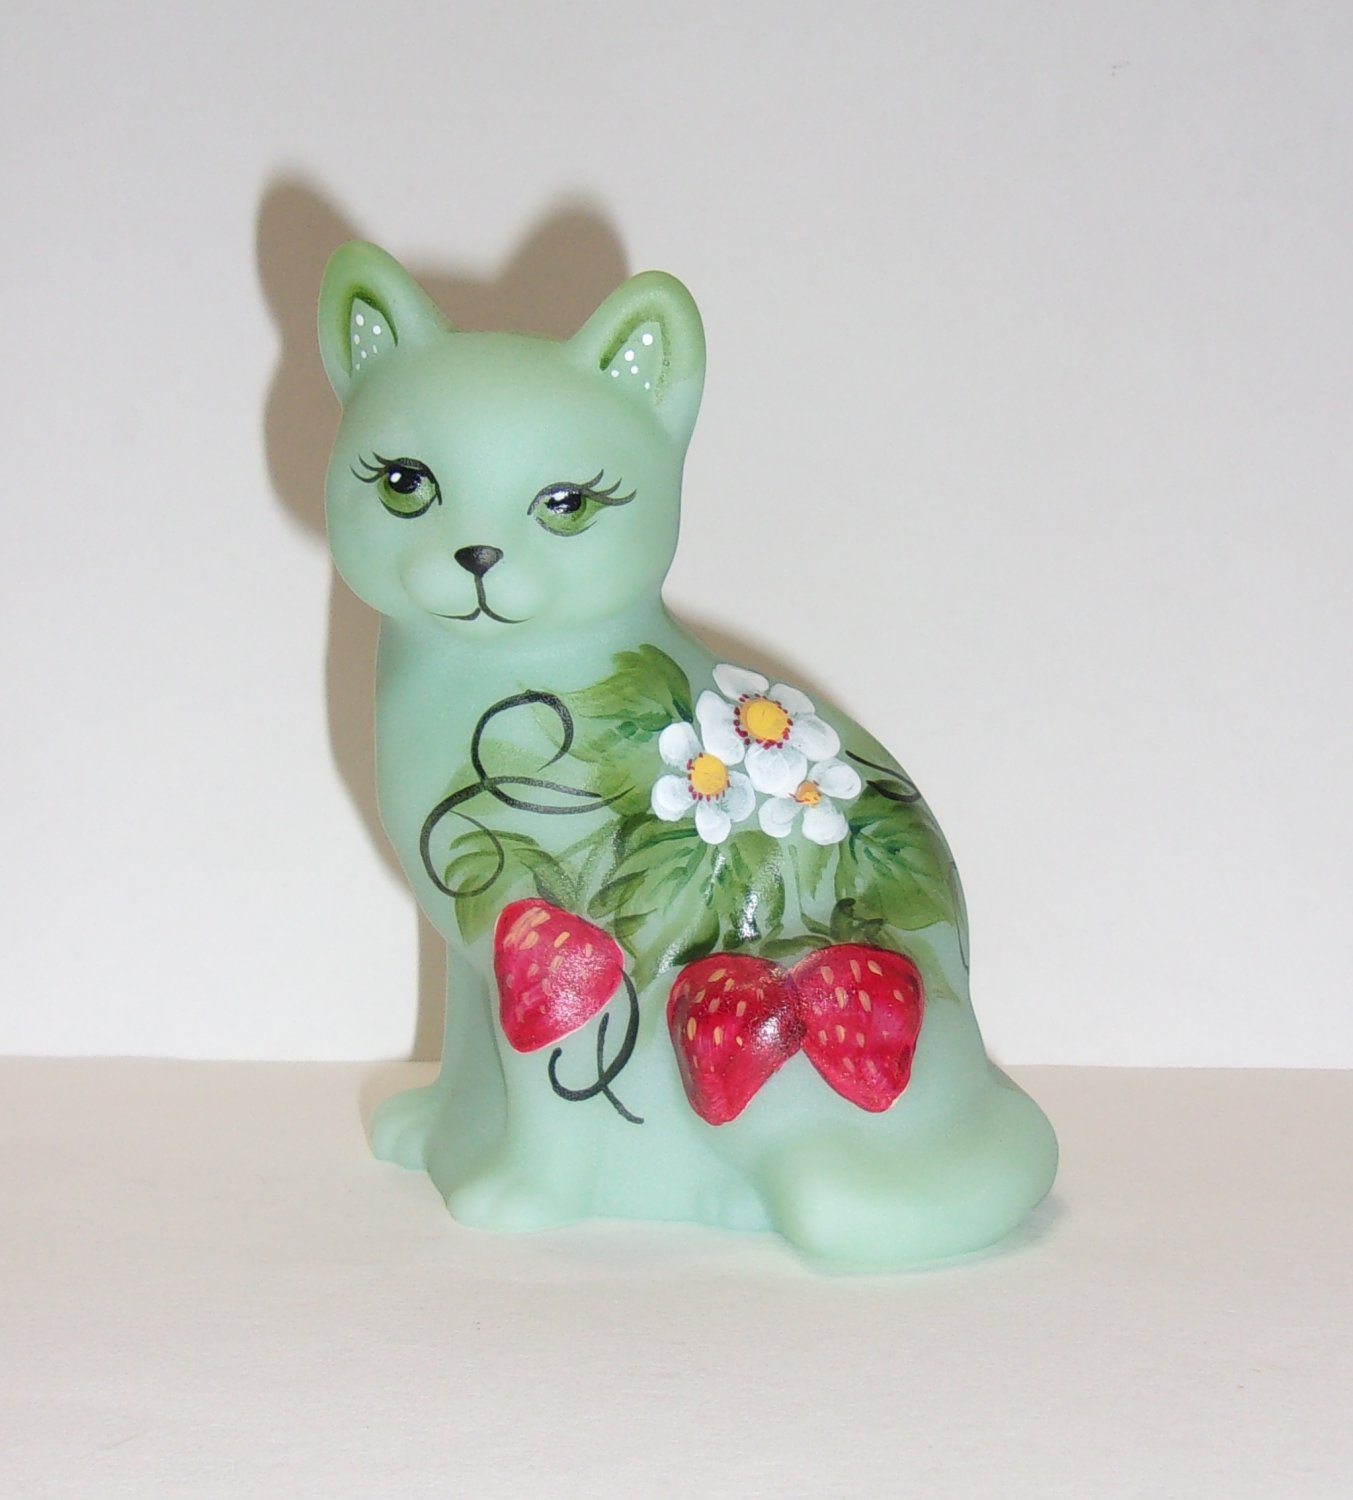 Fenton Glass Jadeite Jade Green Strawberry Sitting Cat Ltd Ed Kibbe #17/37